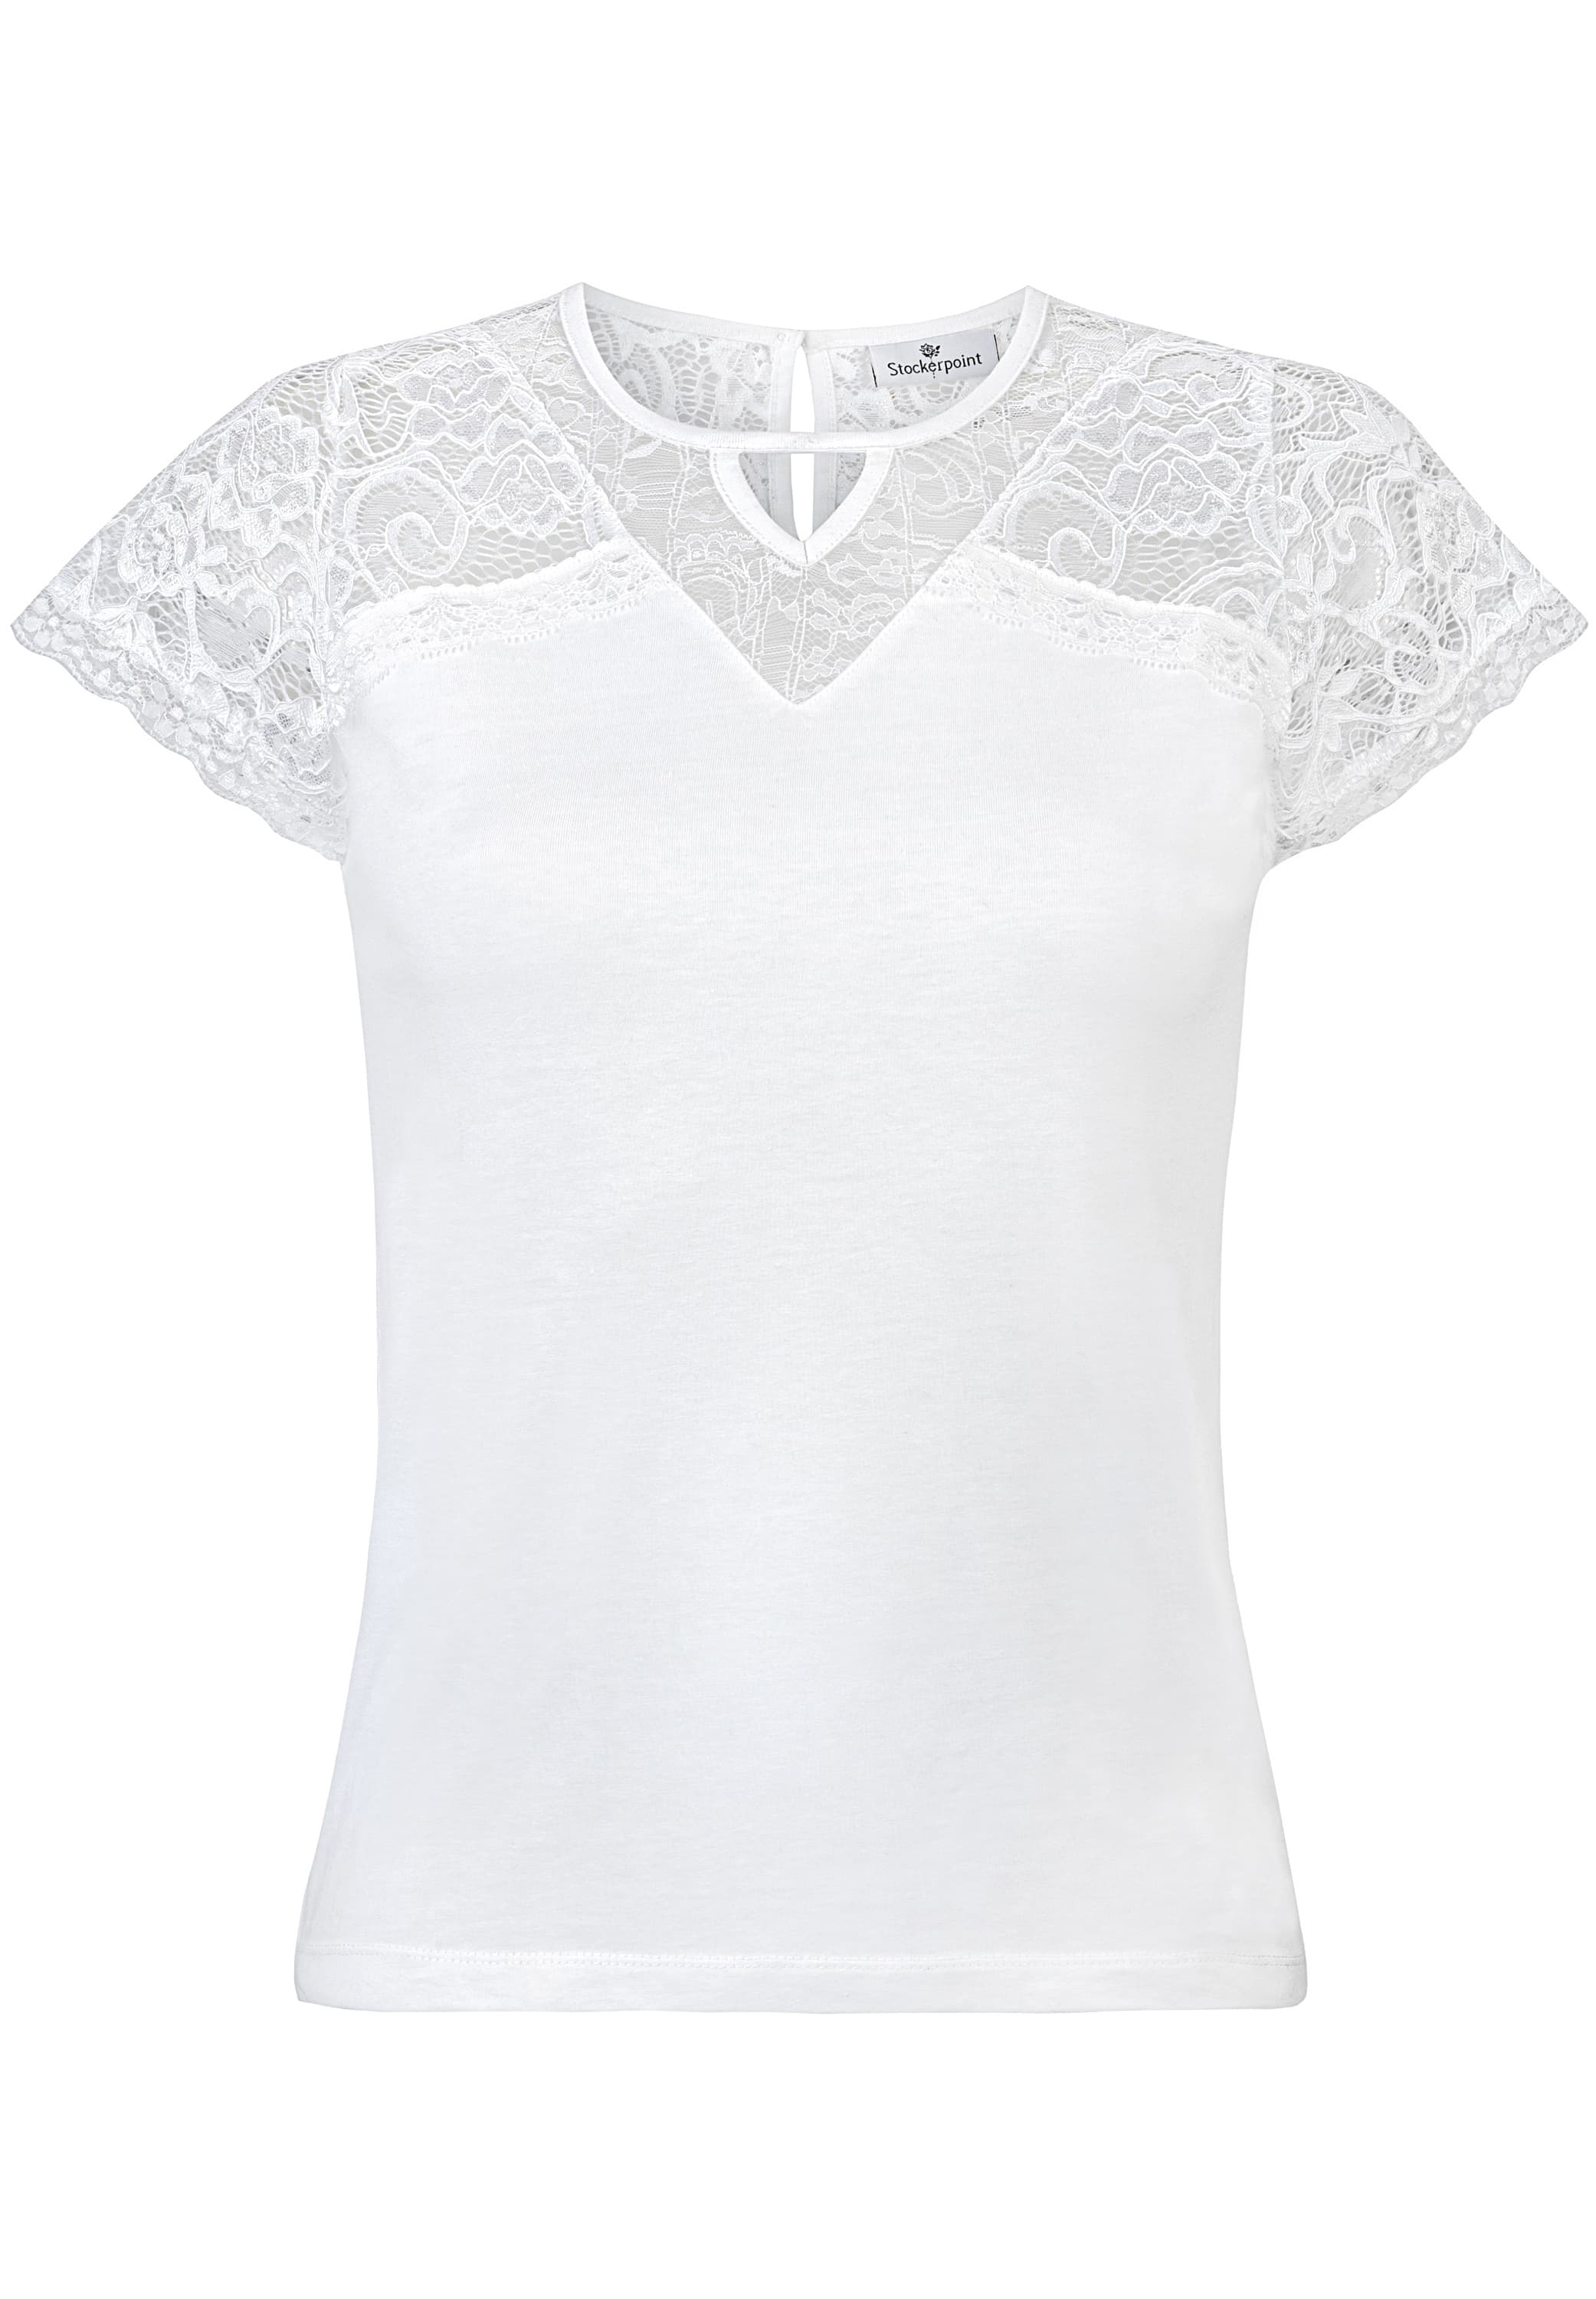 DAMEN Hemden & T-Shirts Spitze Zara Bluse Rabatt 80 % Weiß XS 